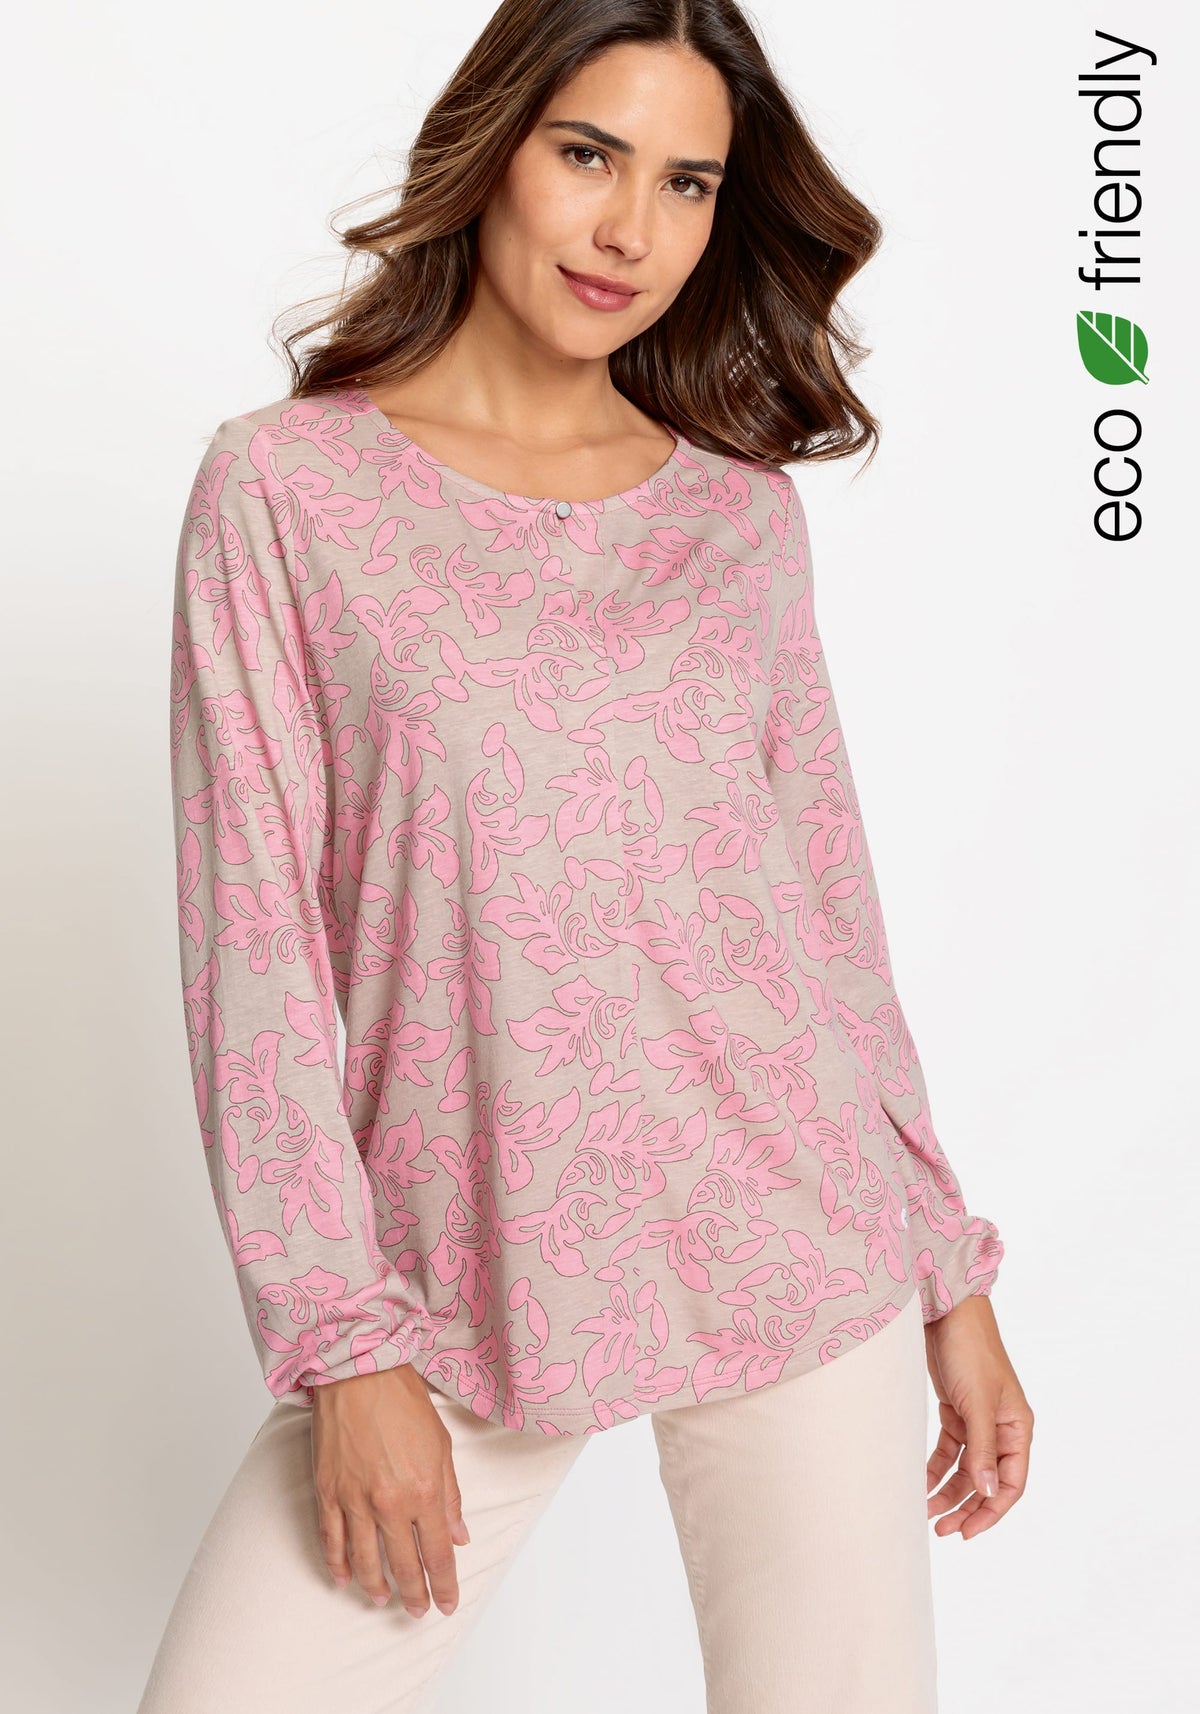 Cotton Blend Long Sleeve Allover Print Keyhole Neckline T-Shirt containing TENCEL™ Modal